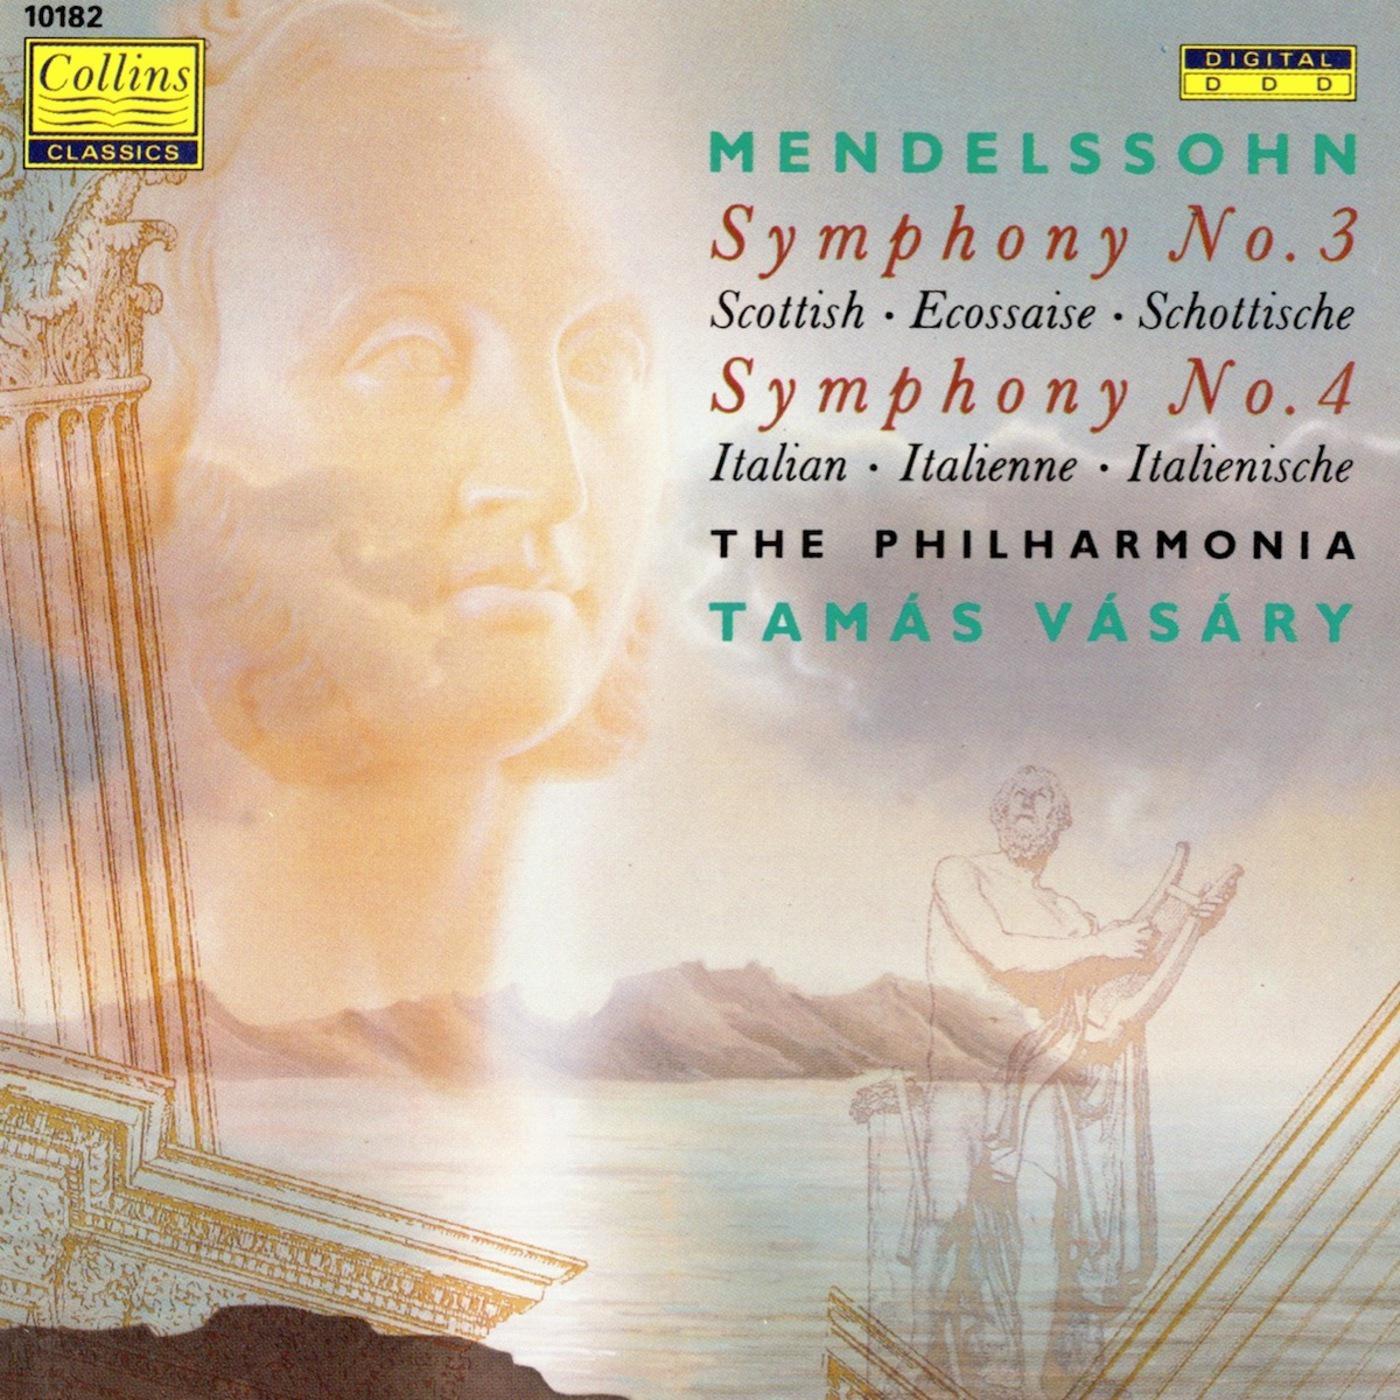 Mendelssohn: Symphonies Nos. 3, "Scottish" & 4, "Italian"